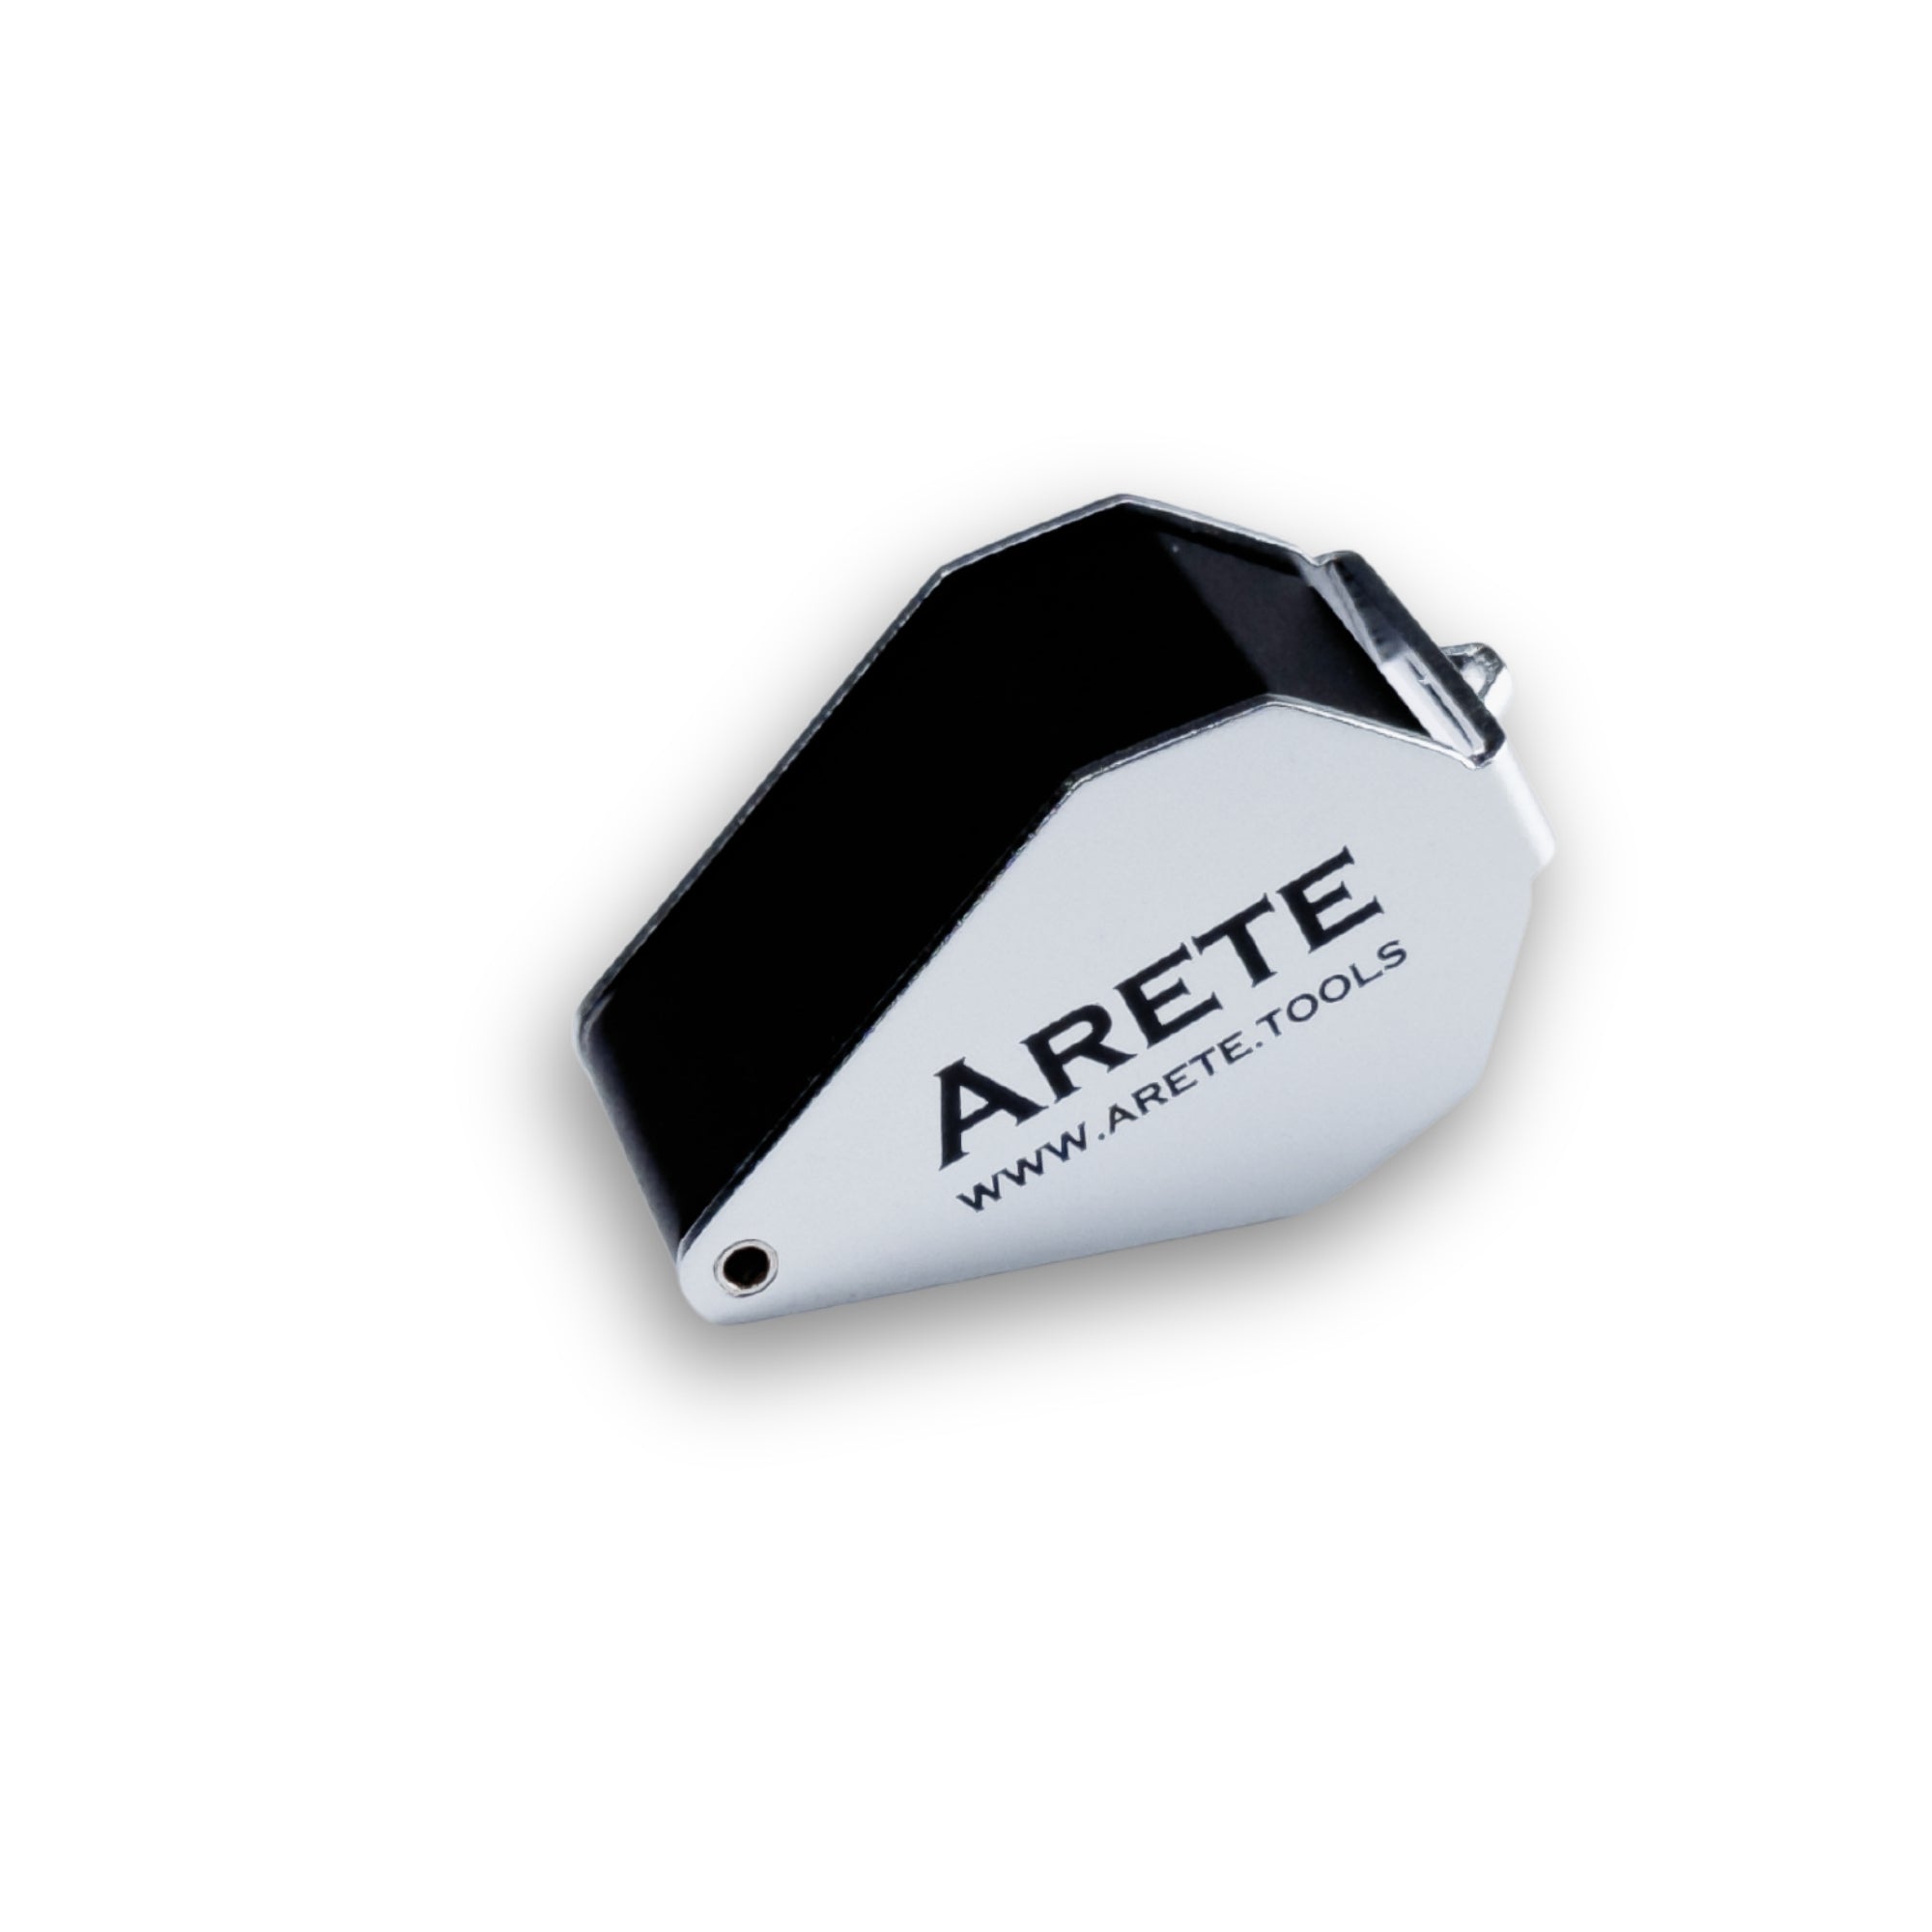 Lente d'ingrandimento tascabile Arete 10x - 21 mm con luce LED a batterie